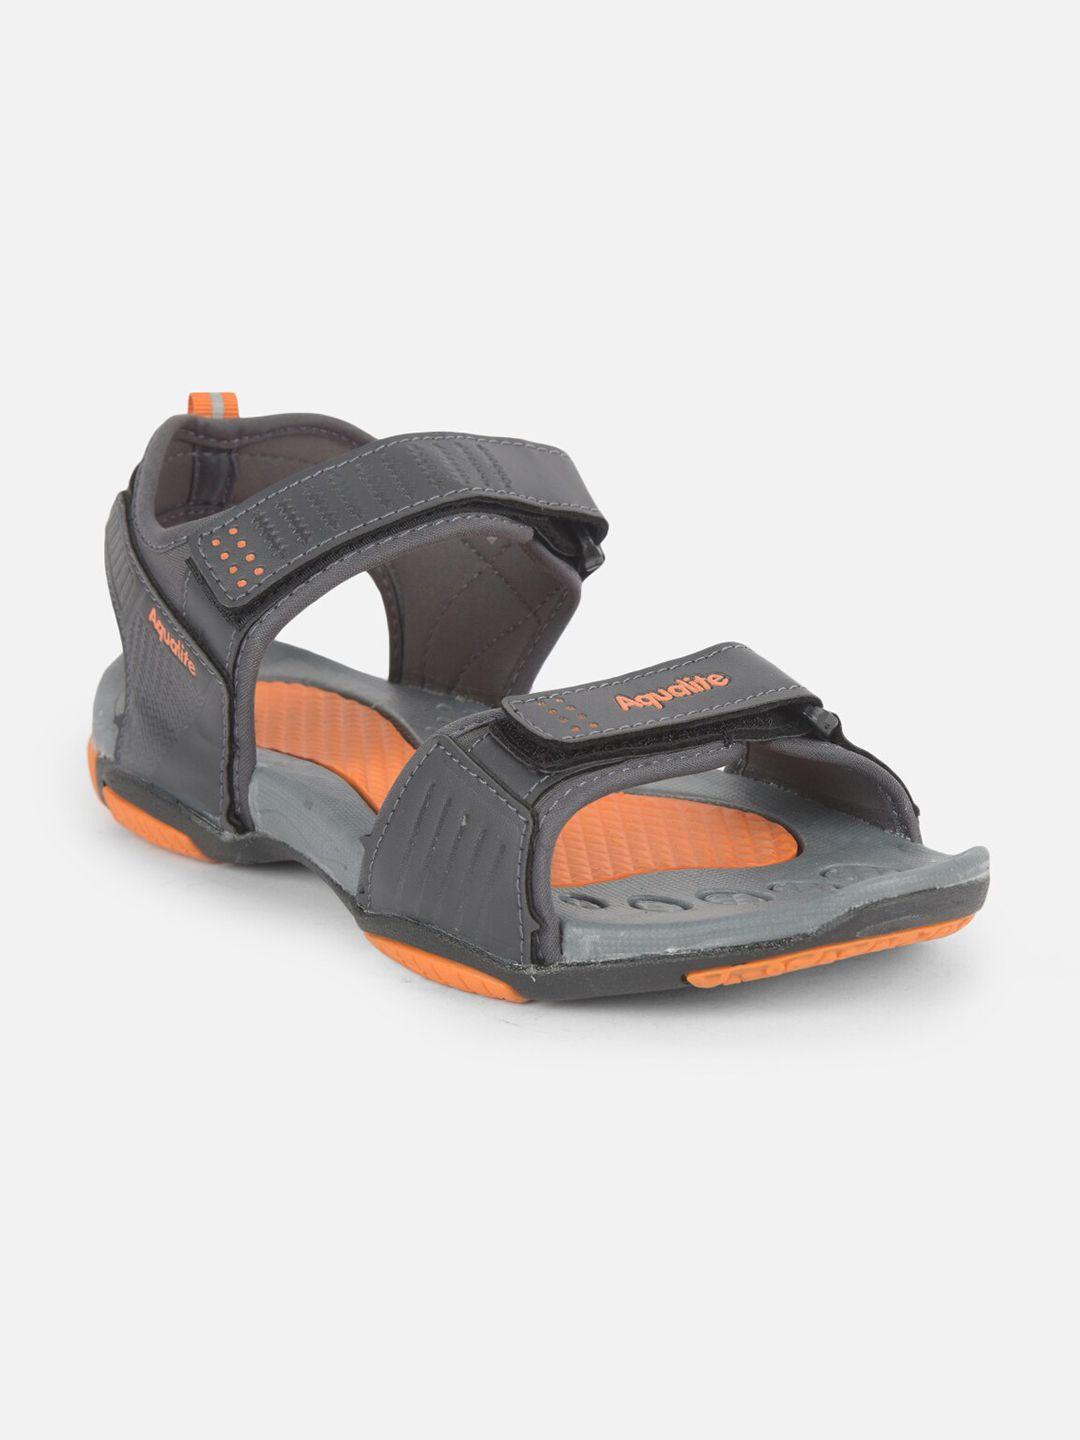 aqualite-men-grey-&-orange-sport-sandals